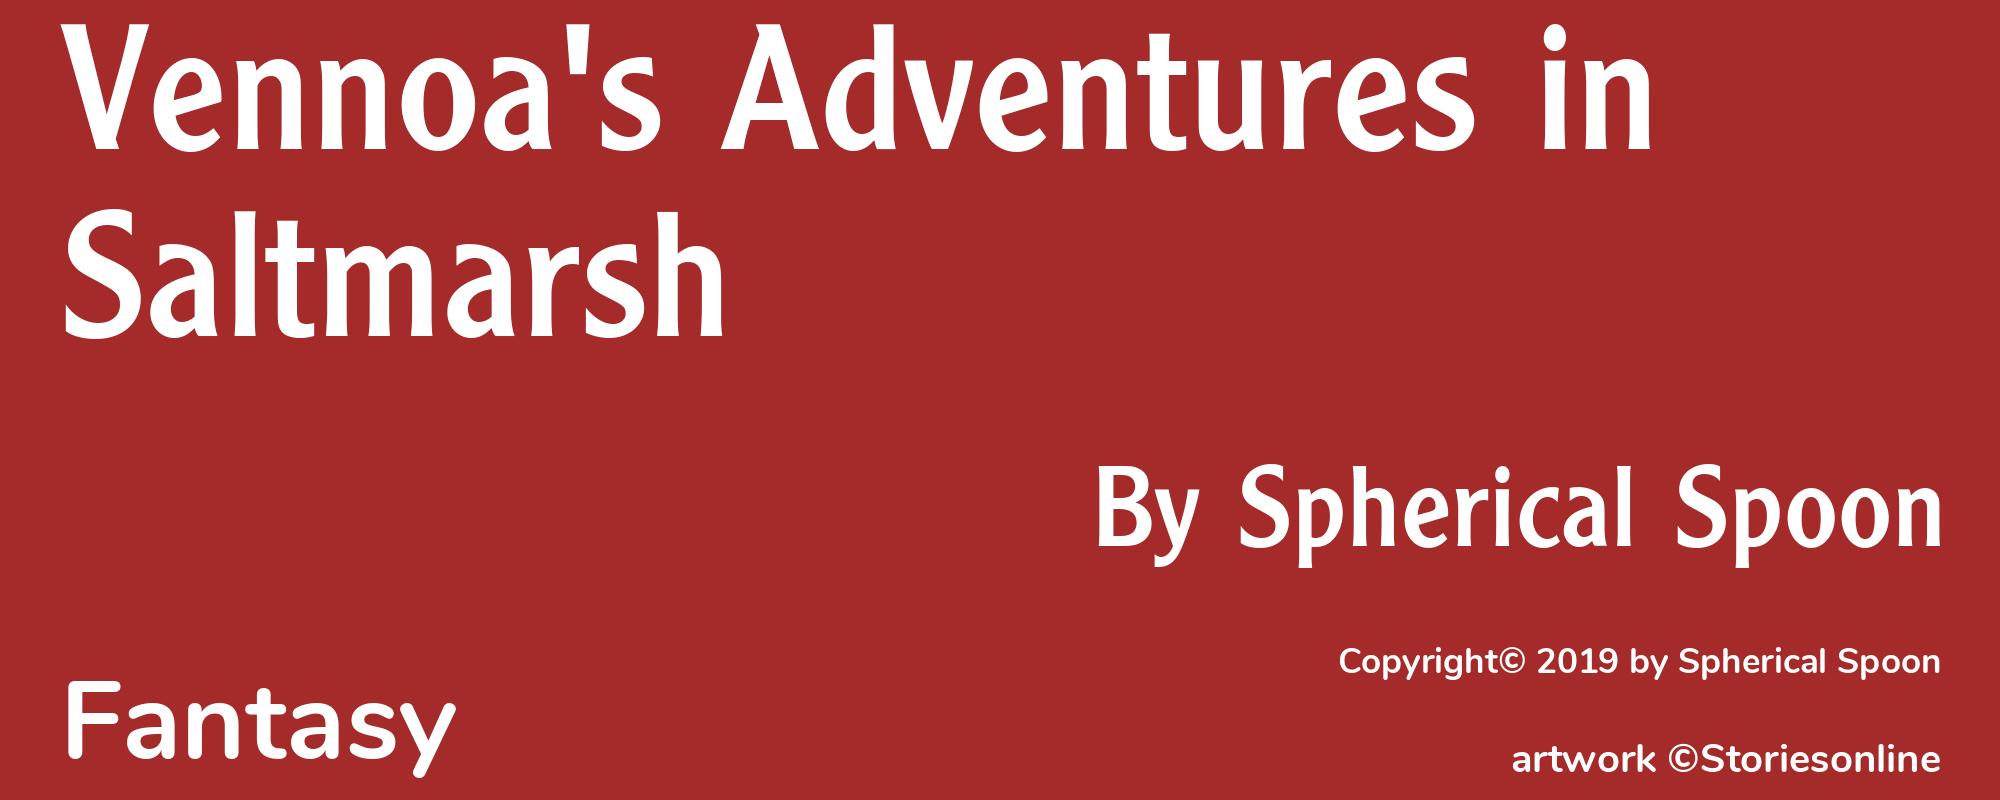 Vennoa's Adventures in Saltmarsh - Cover